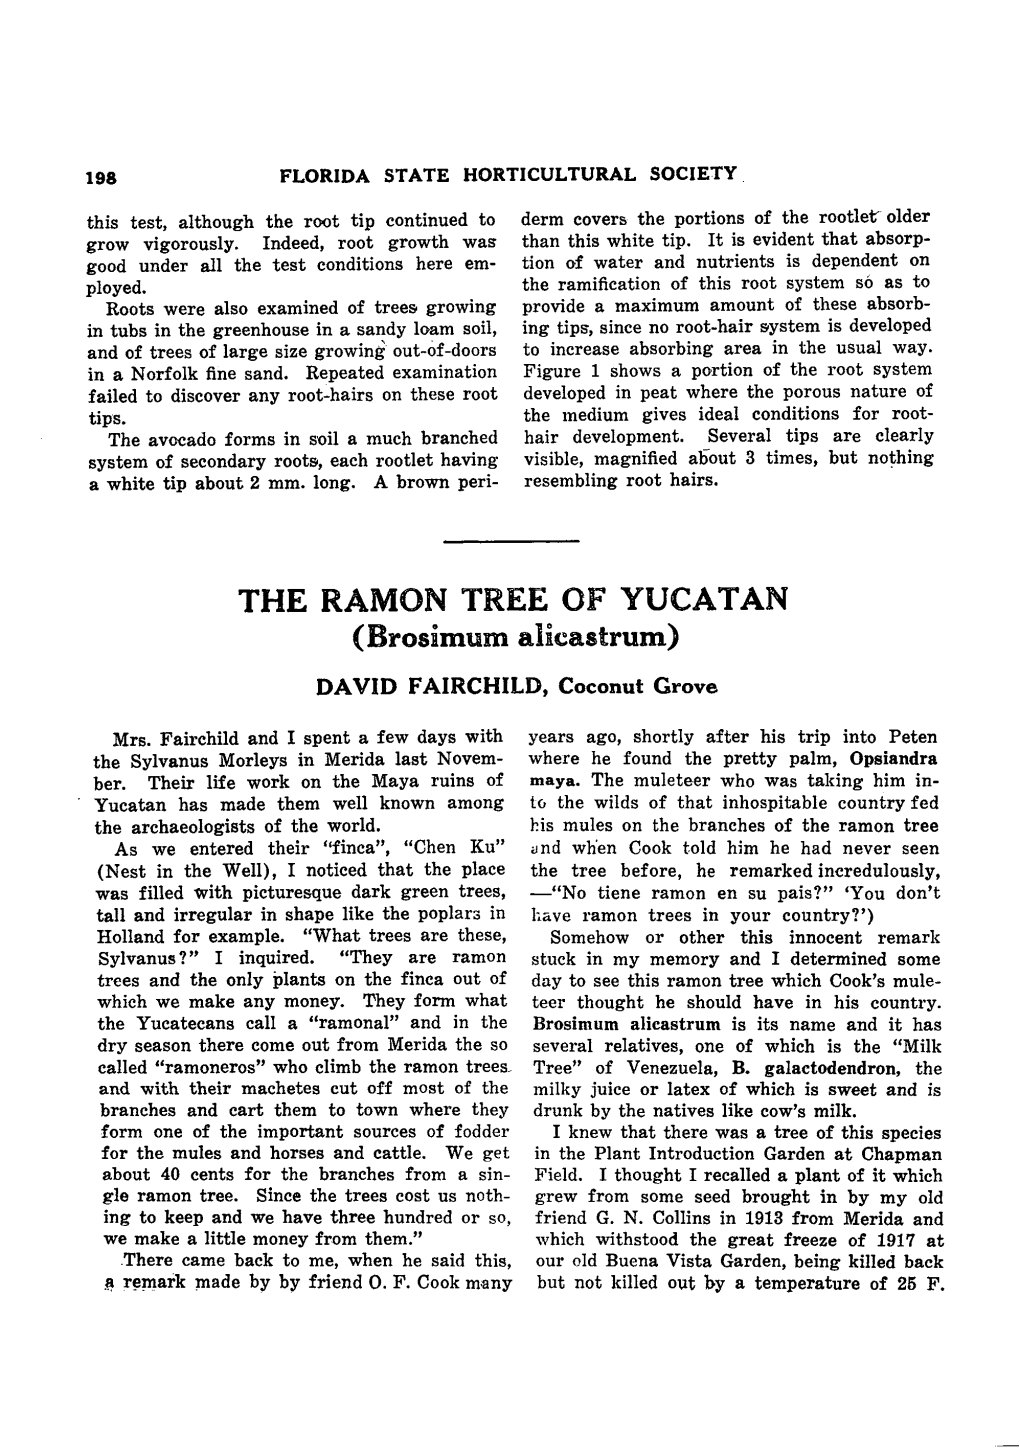 THE RAMON TREE of YUCATAN (Brosimiim Alicastrum)